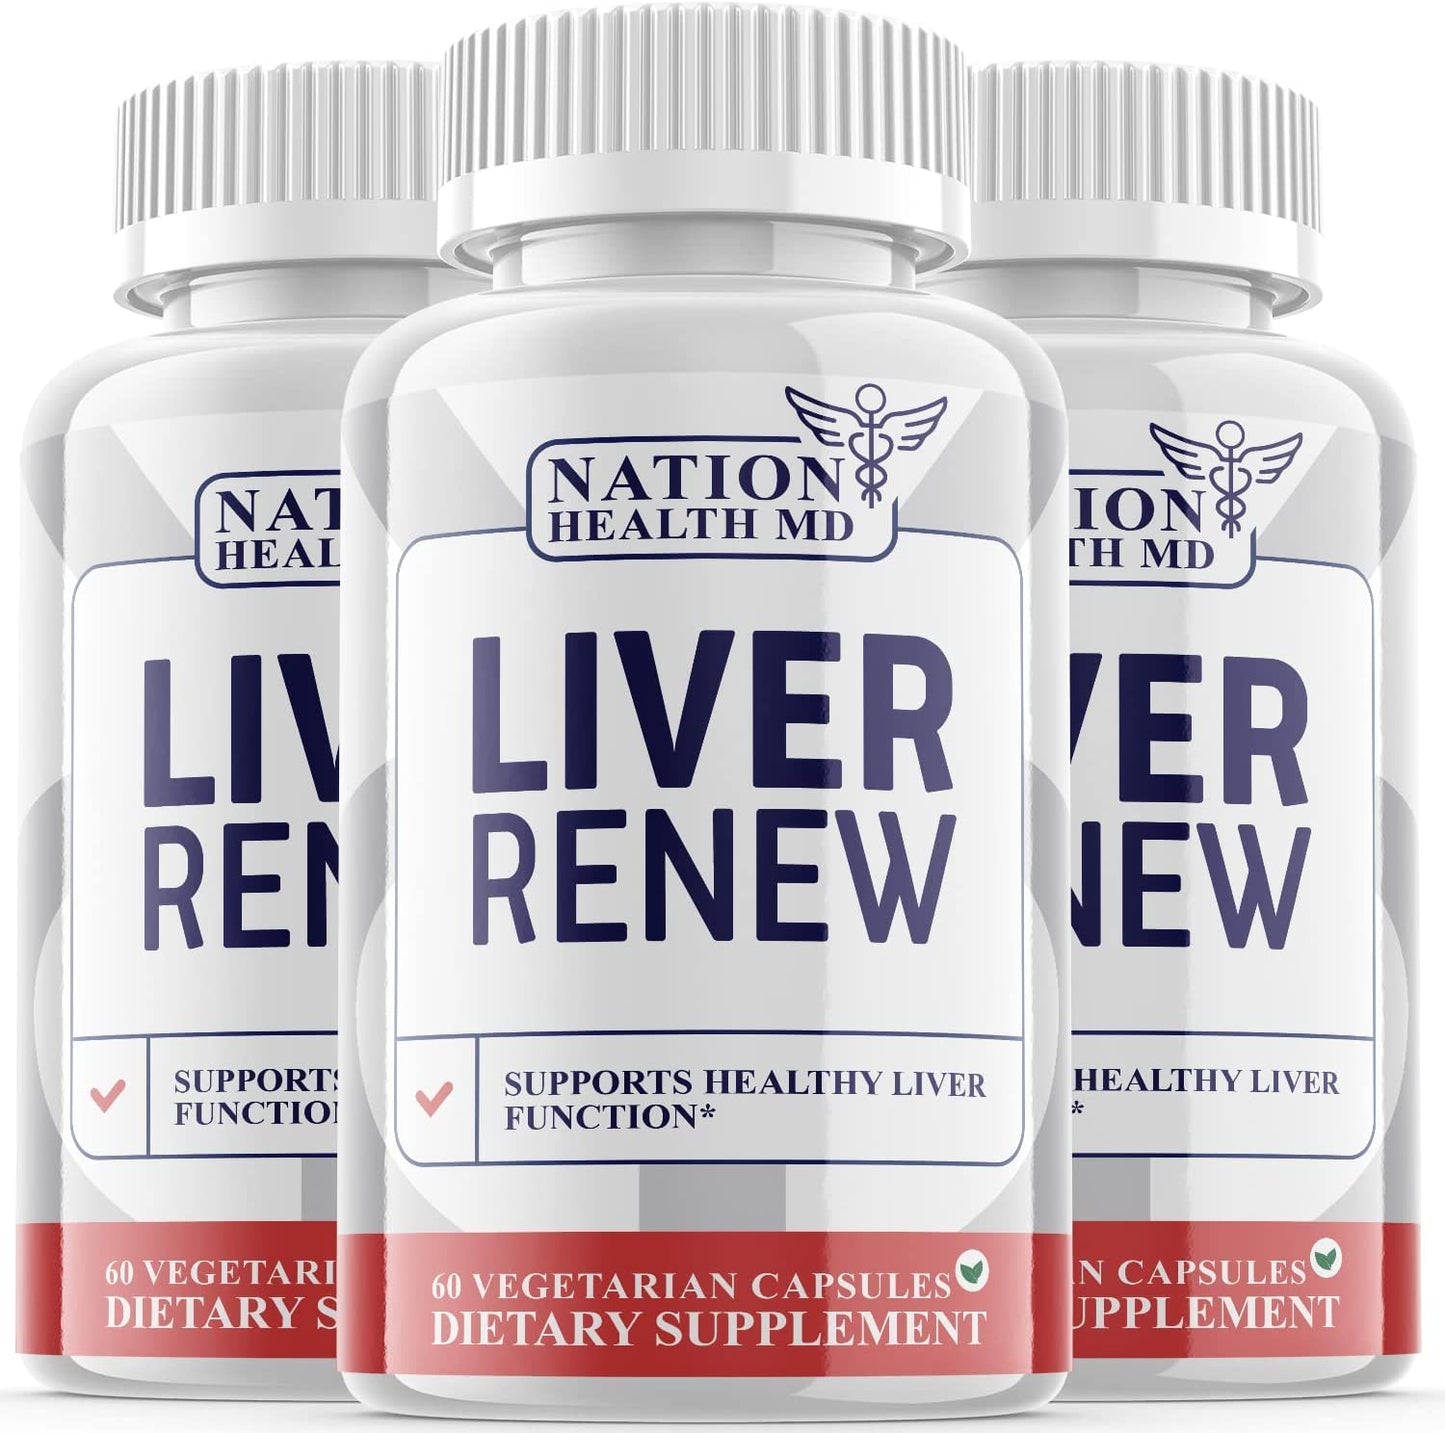 Liver Renew Pills